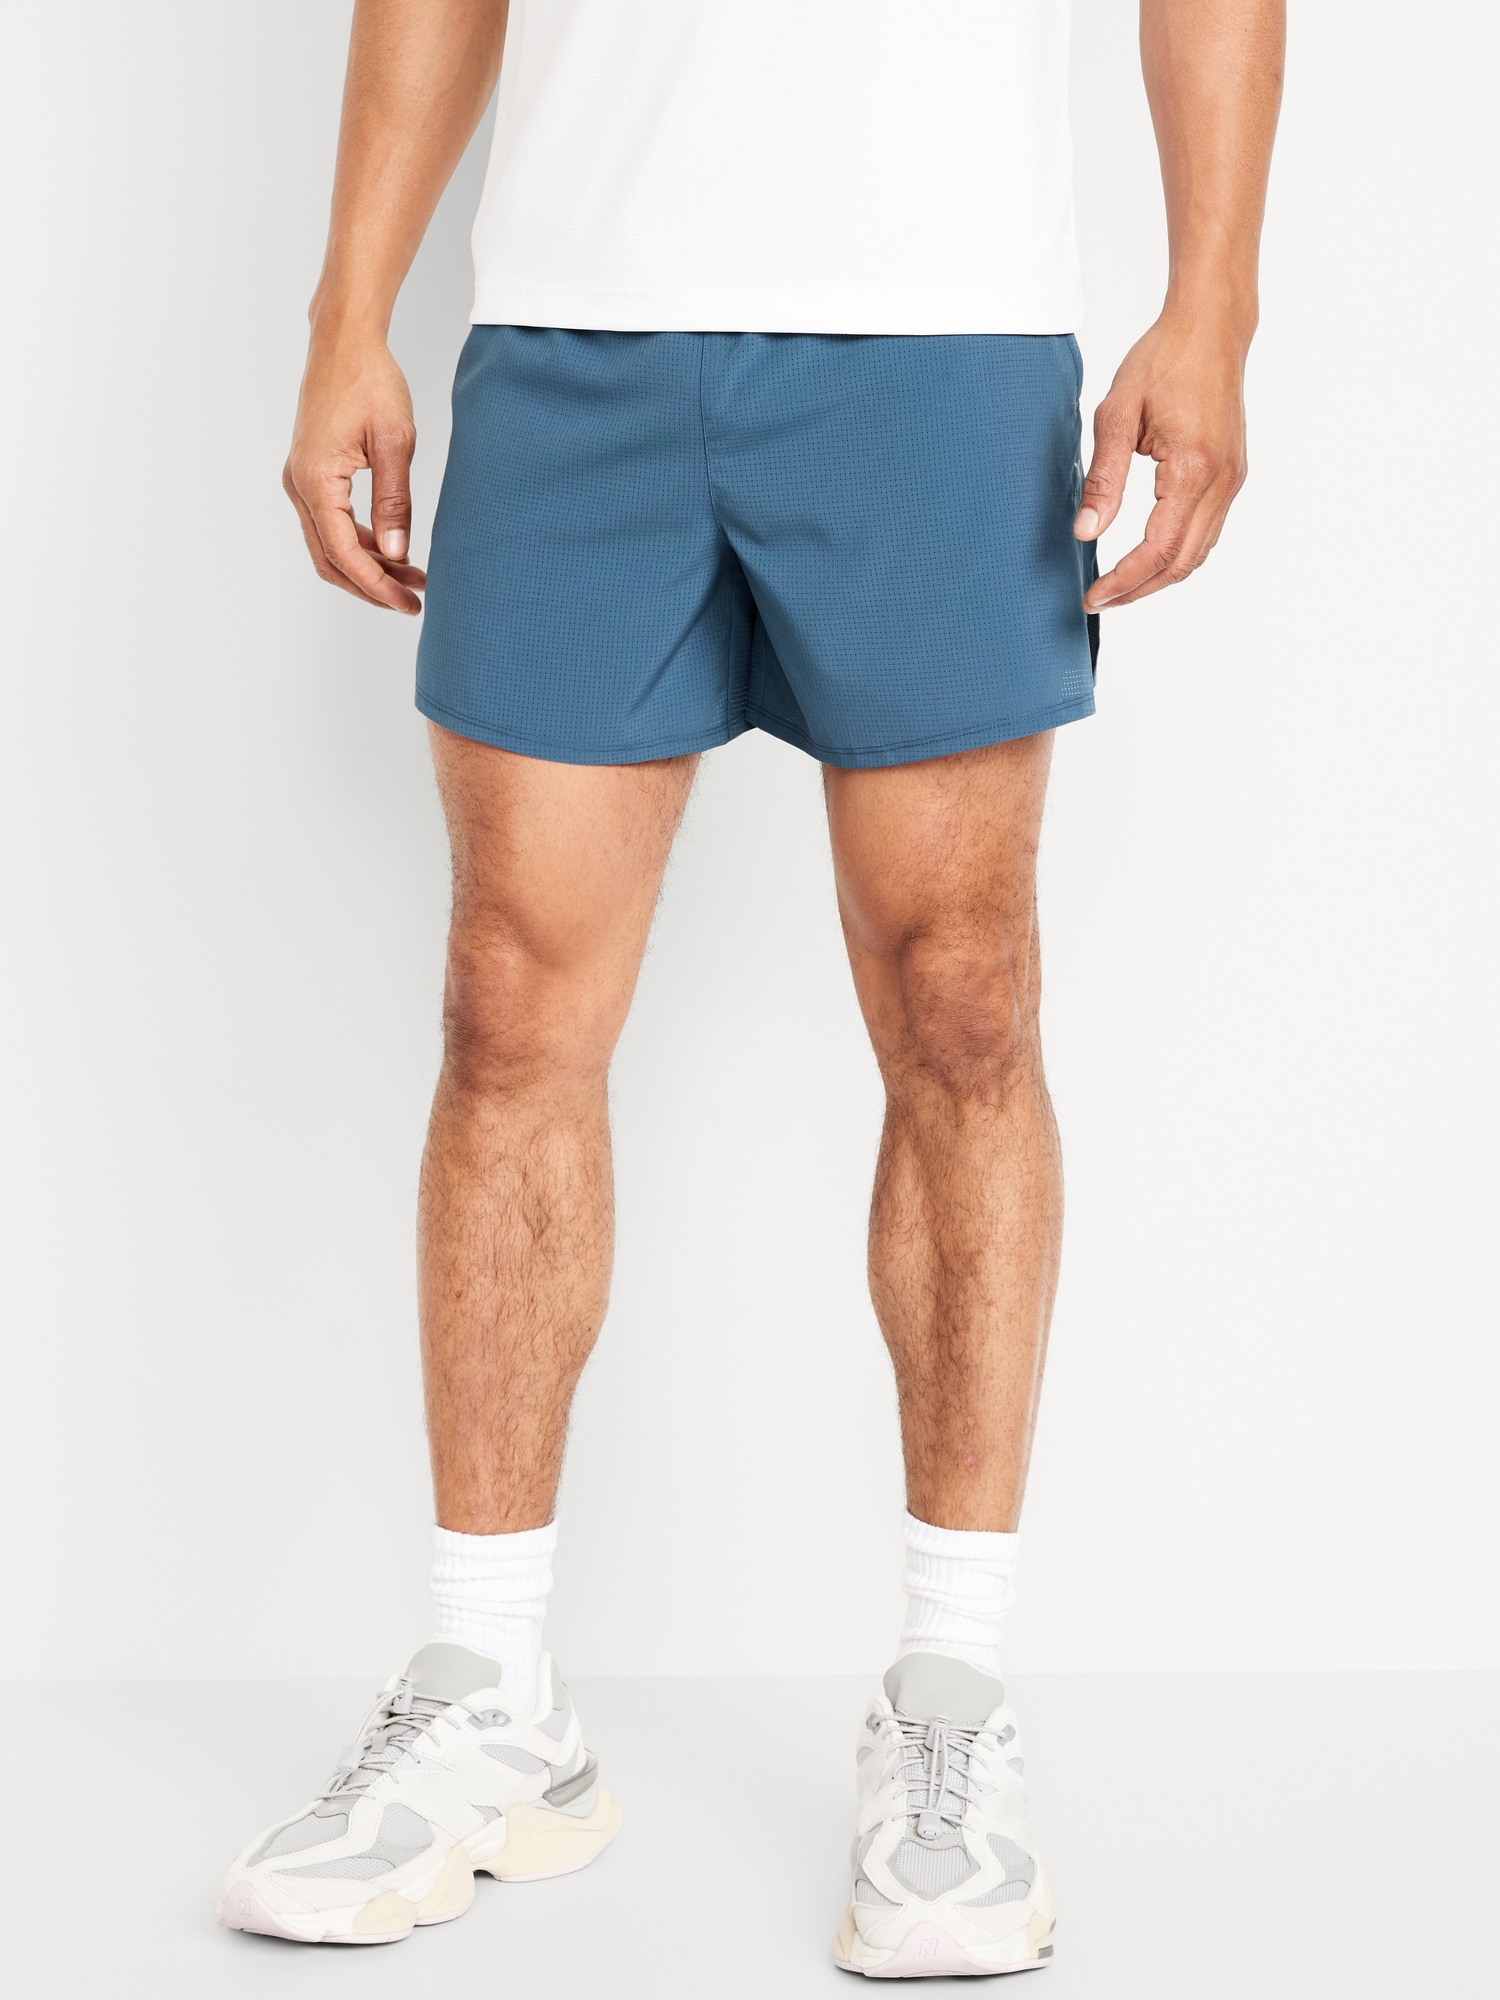 Mens Shorts 5 Inseam Polyester